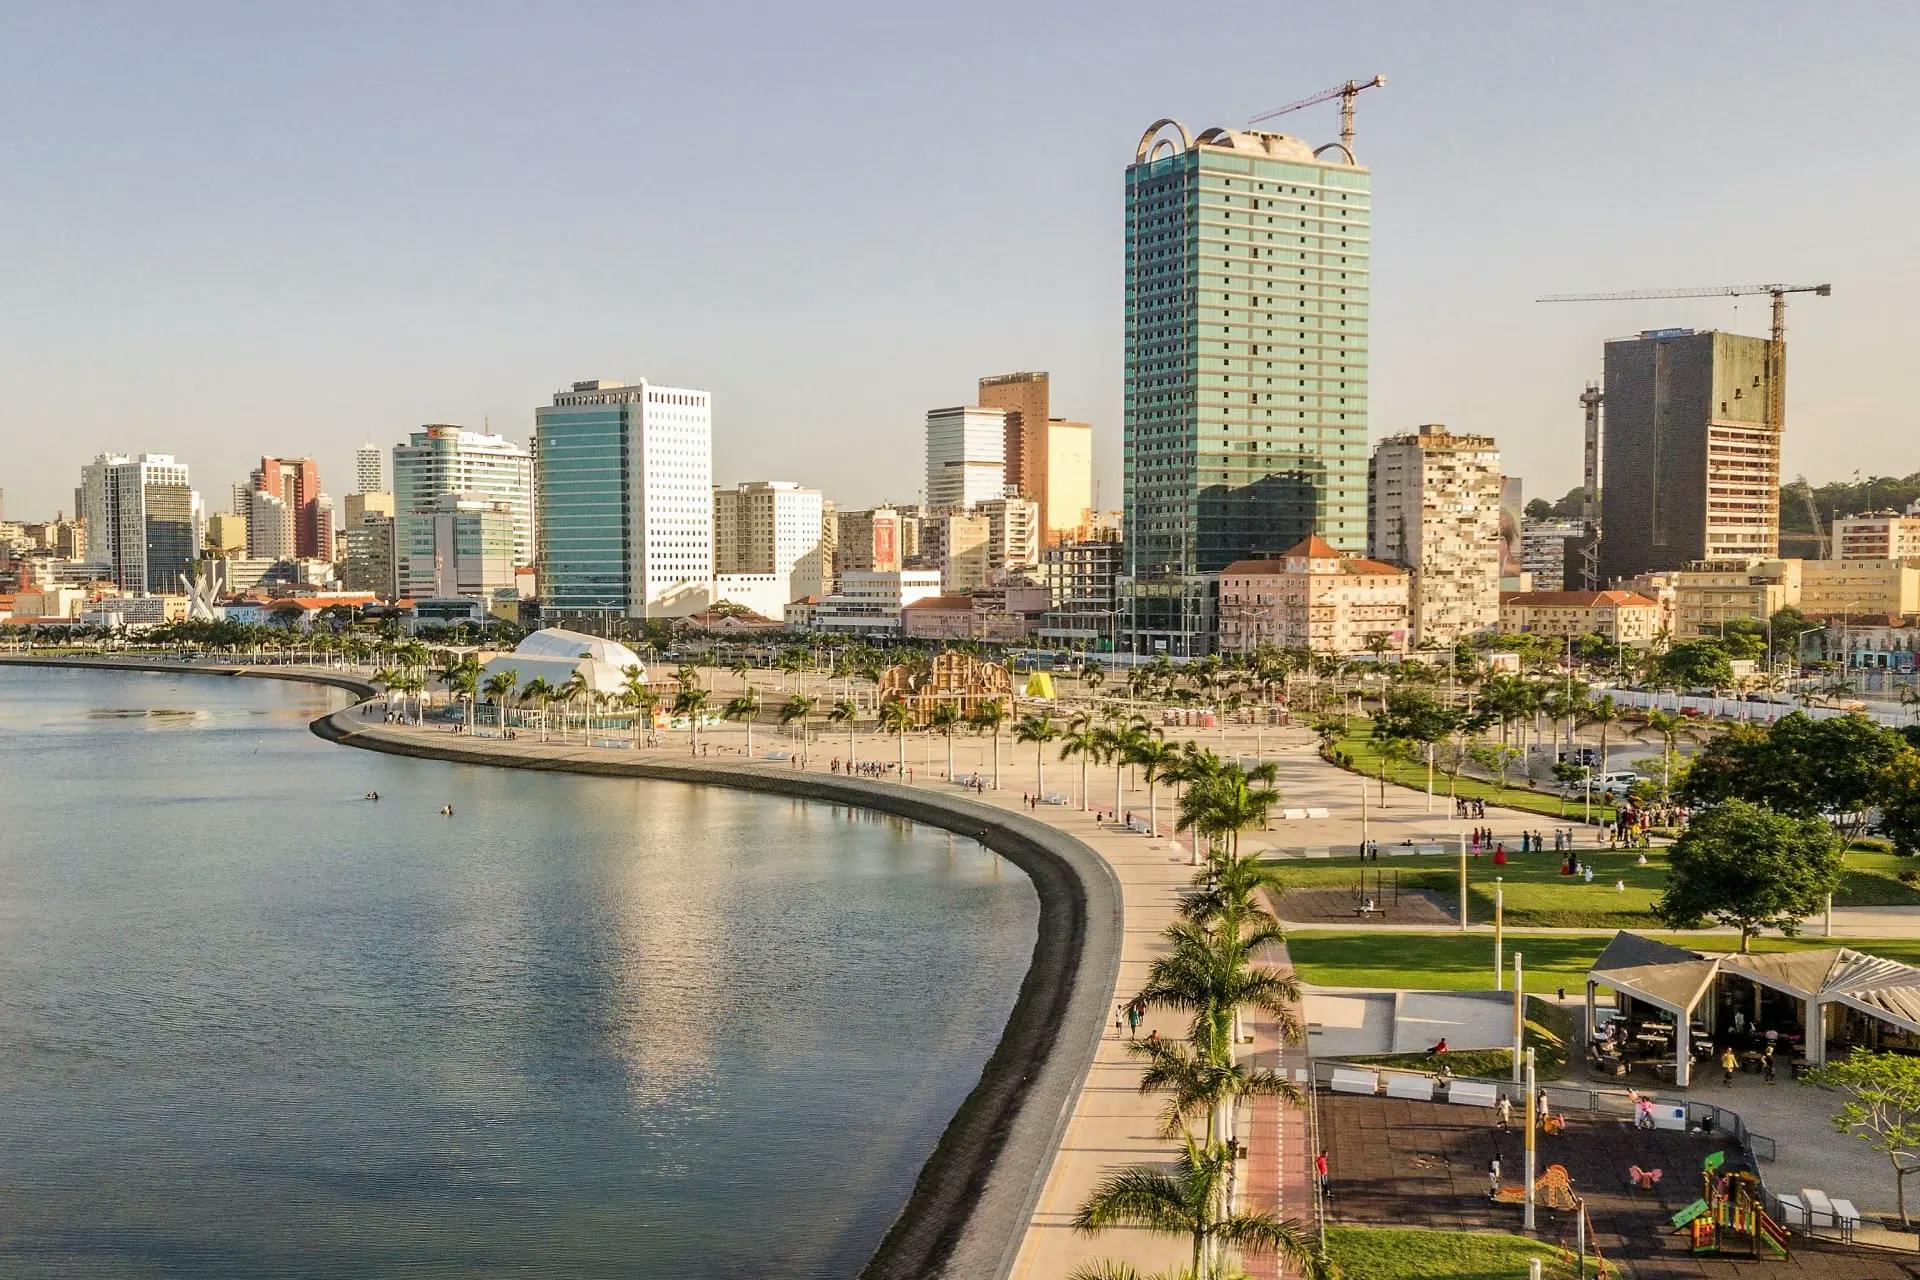 Angolan skyline